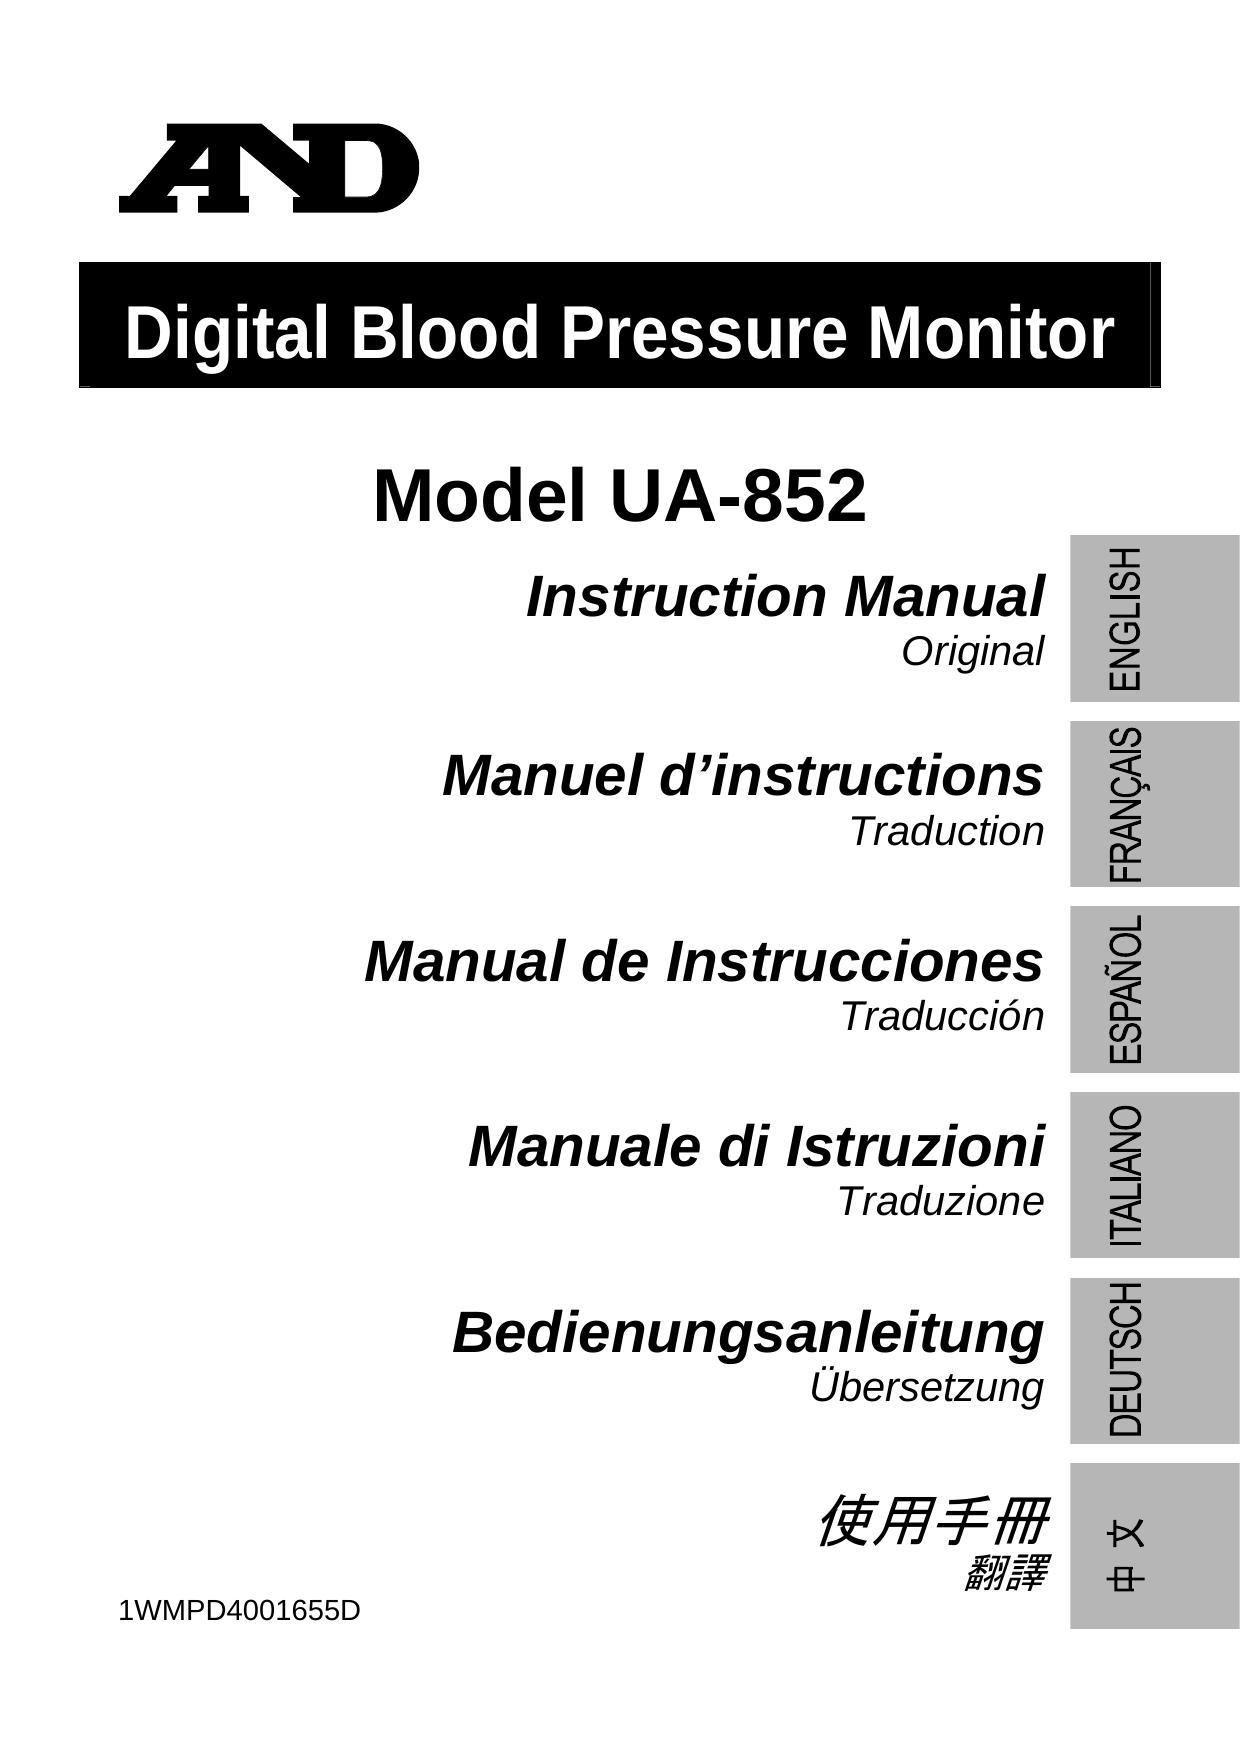 ad-digital-blood-pressure-monitor-model-ua-852-instruction-manual.pdf